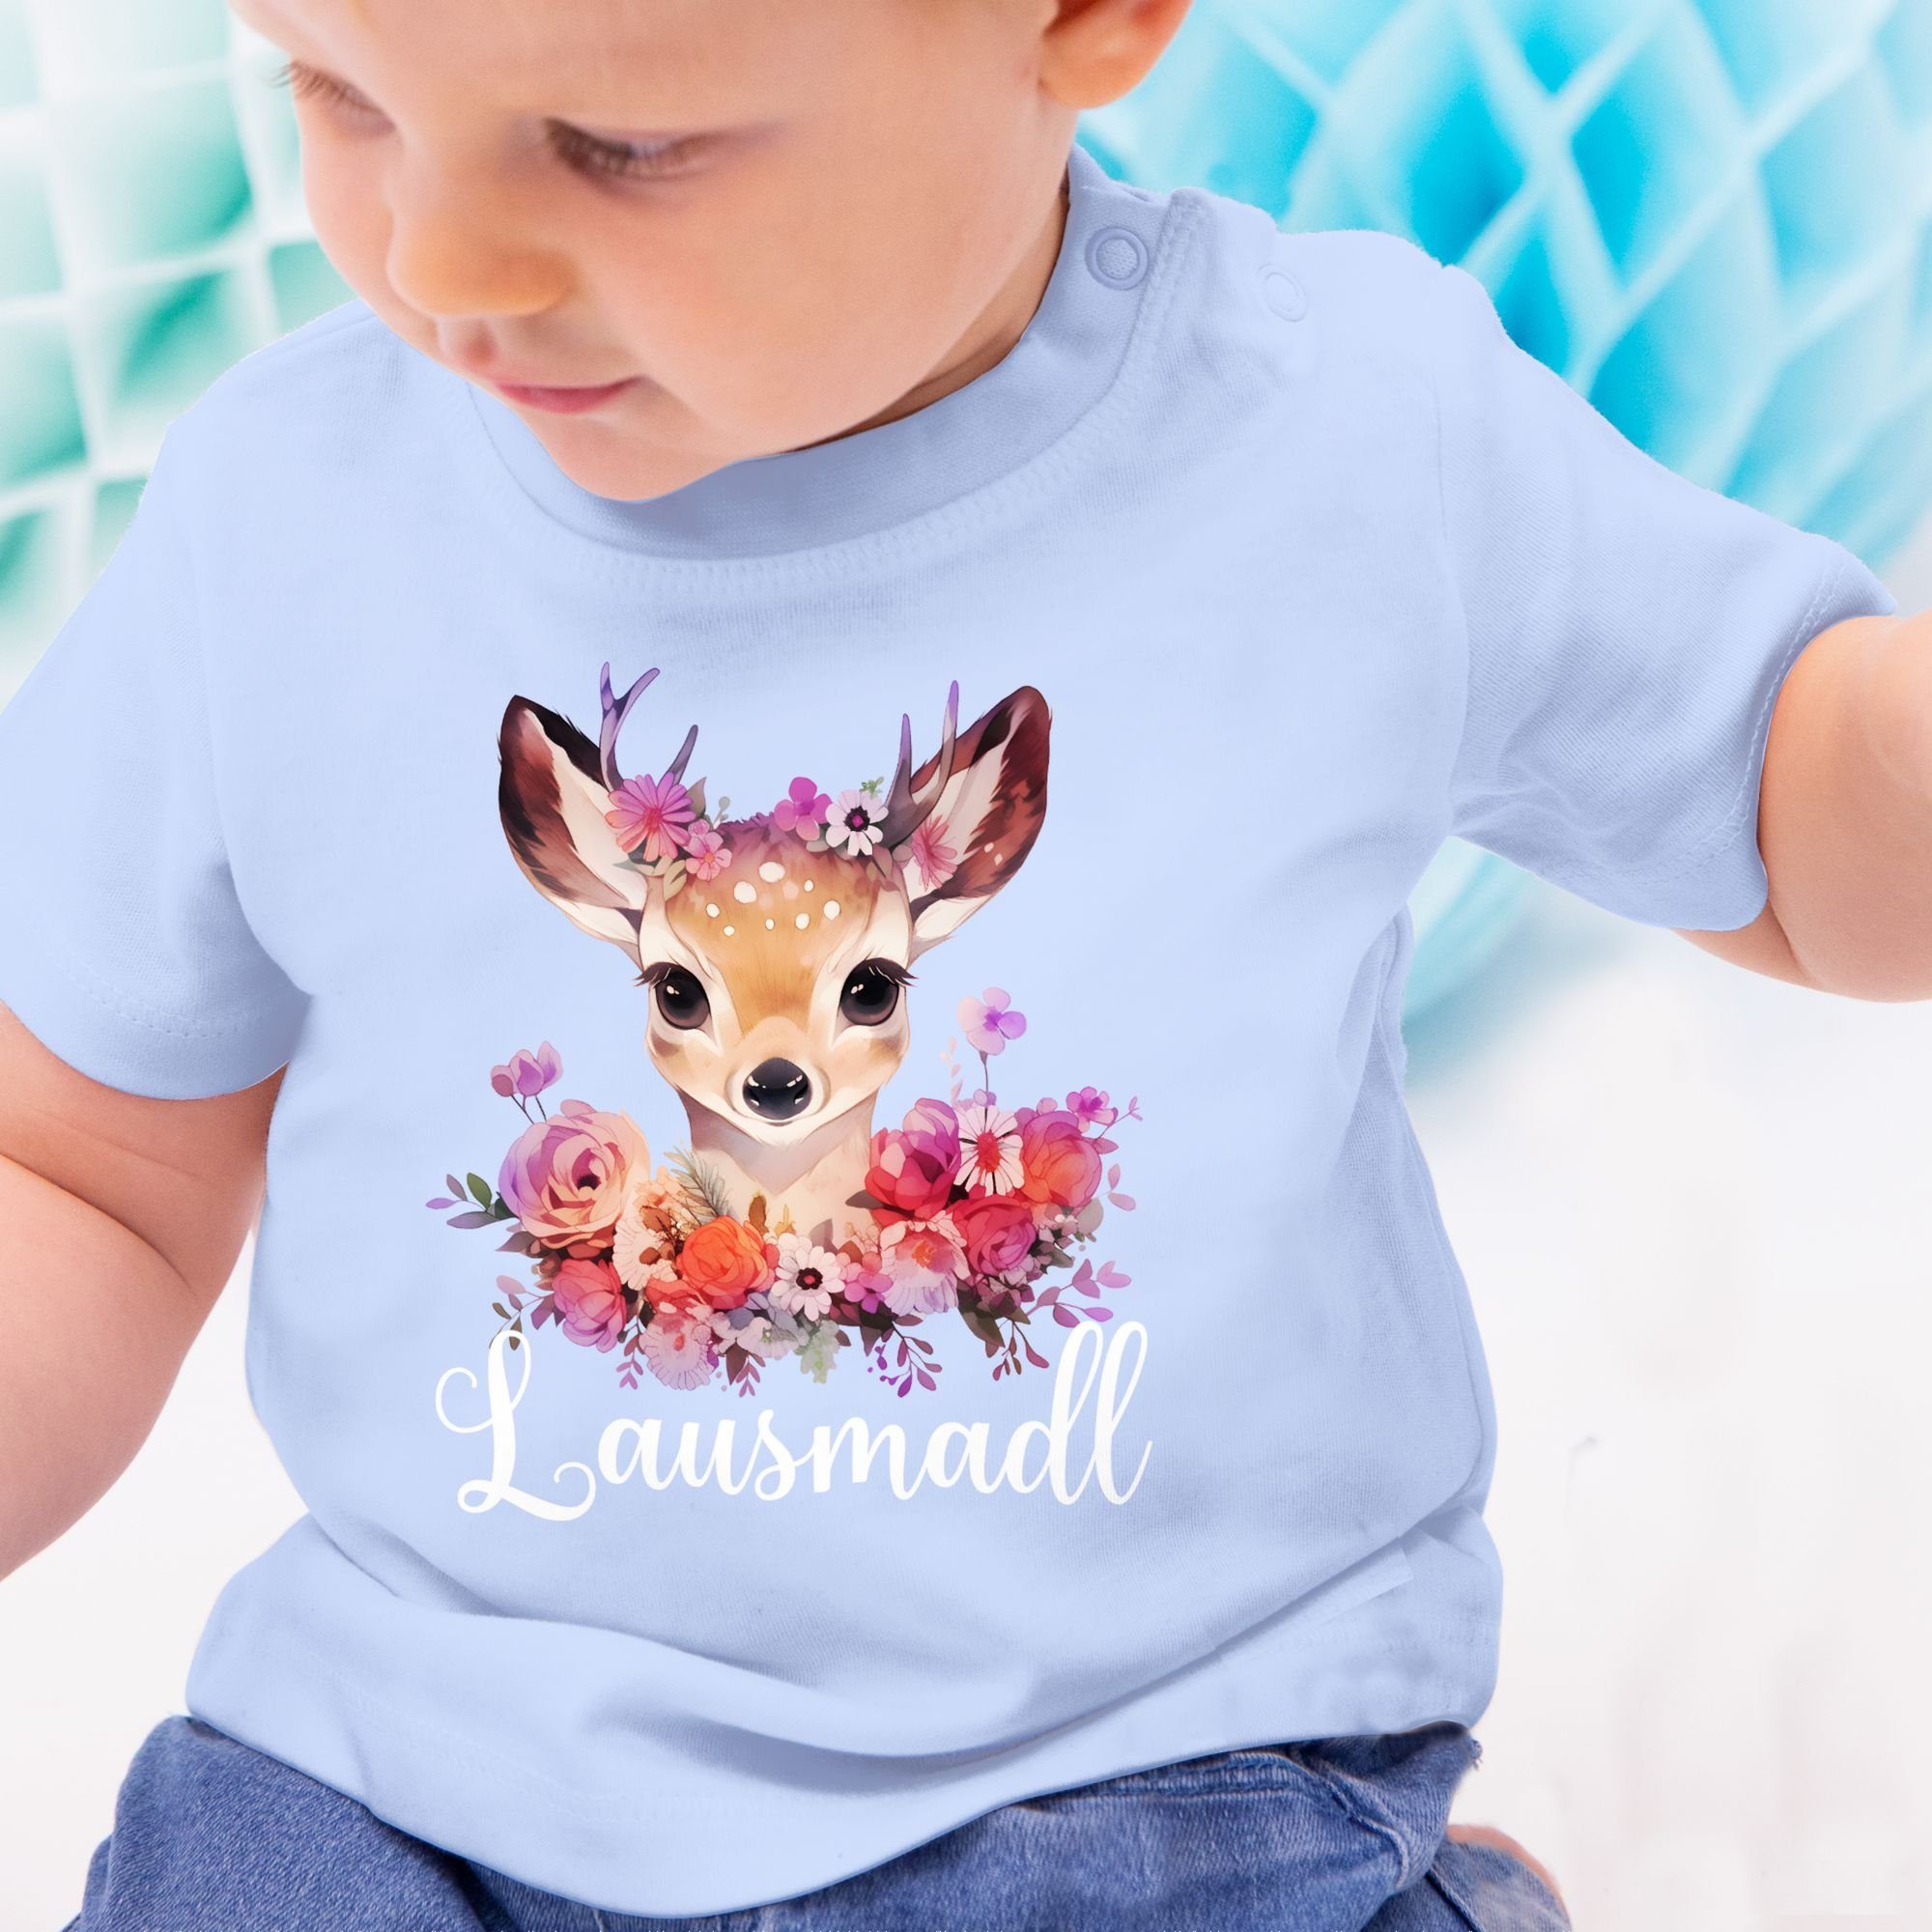 Lausmadl Shirtracer Babyblau Mode Lausdrindl Lausmädchen Oktoberfest Outfit Lausmadel 2 Baby für T-Shirt